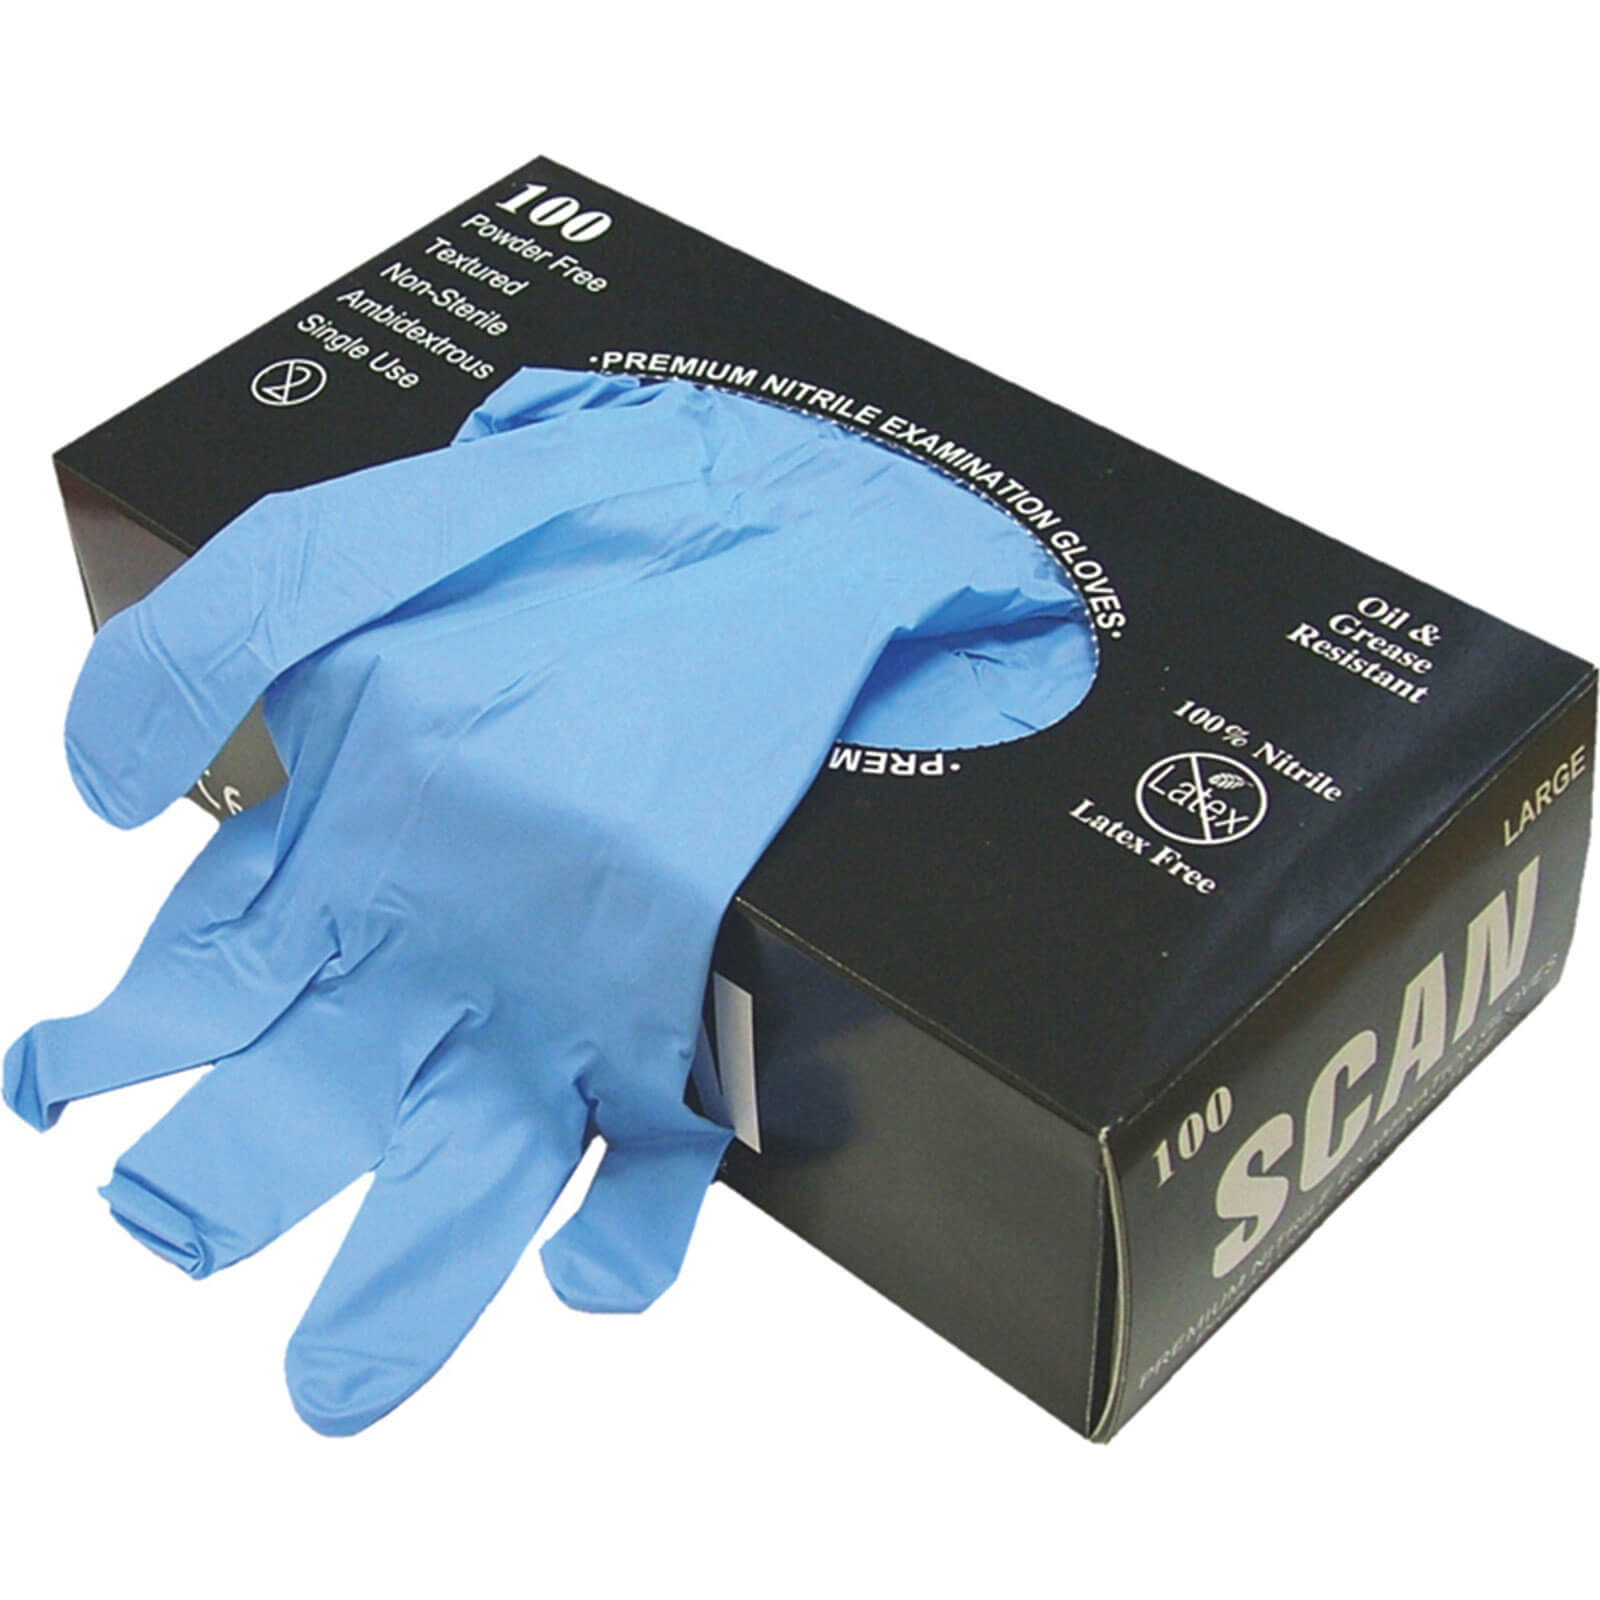 Нейлон нитрил. Перчатки Nitrile Premium Keson. Nitrile Gloves Premium quality перчатки. Ringers Gloves 065 r-Flex Impact Nitrile. Перчатки одноразовые тканевые.